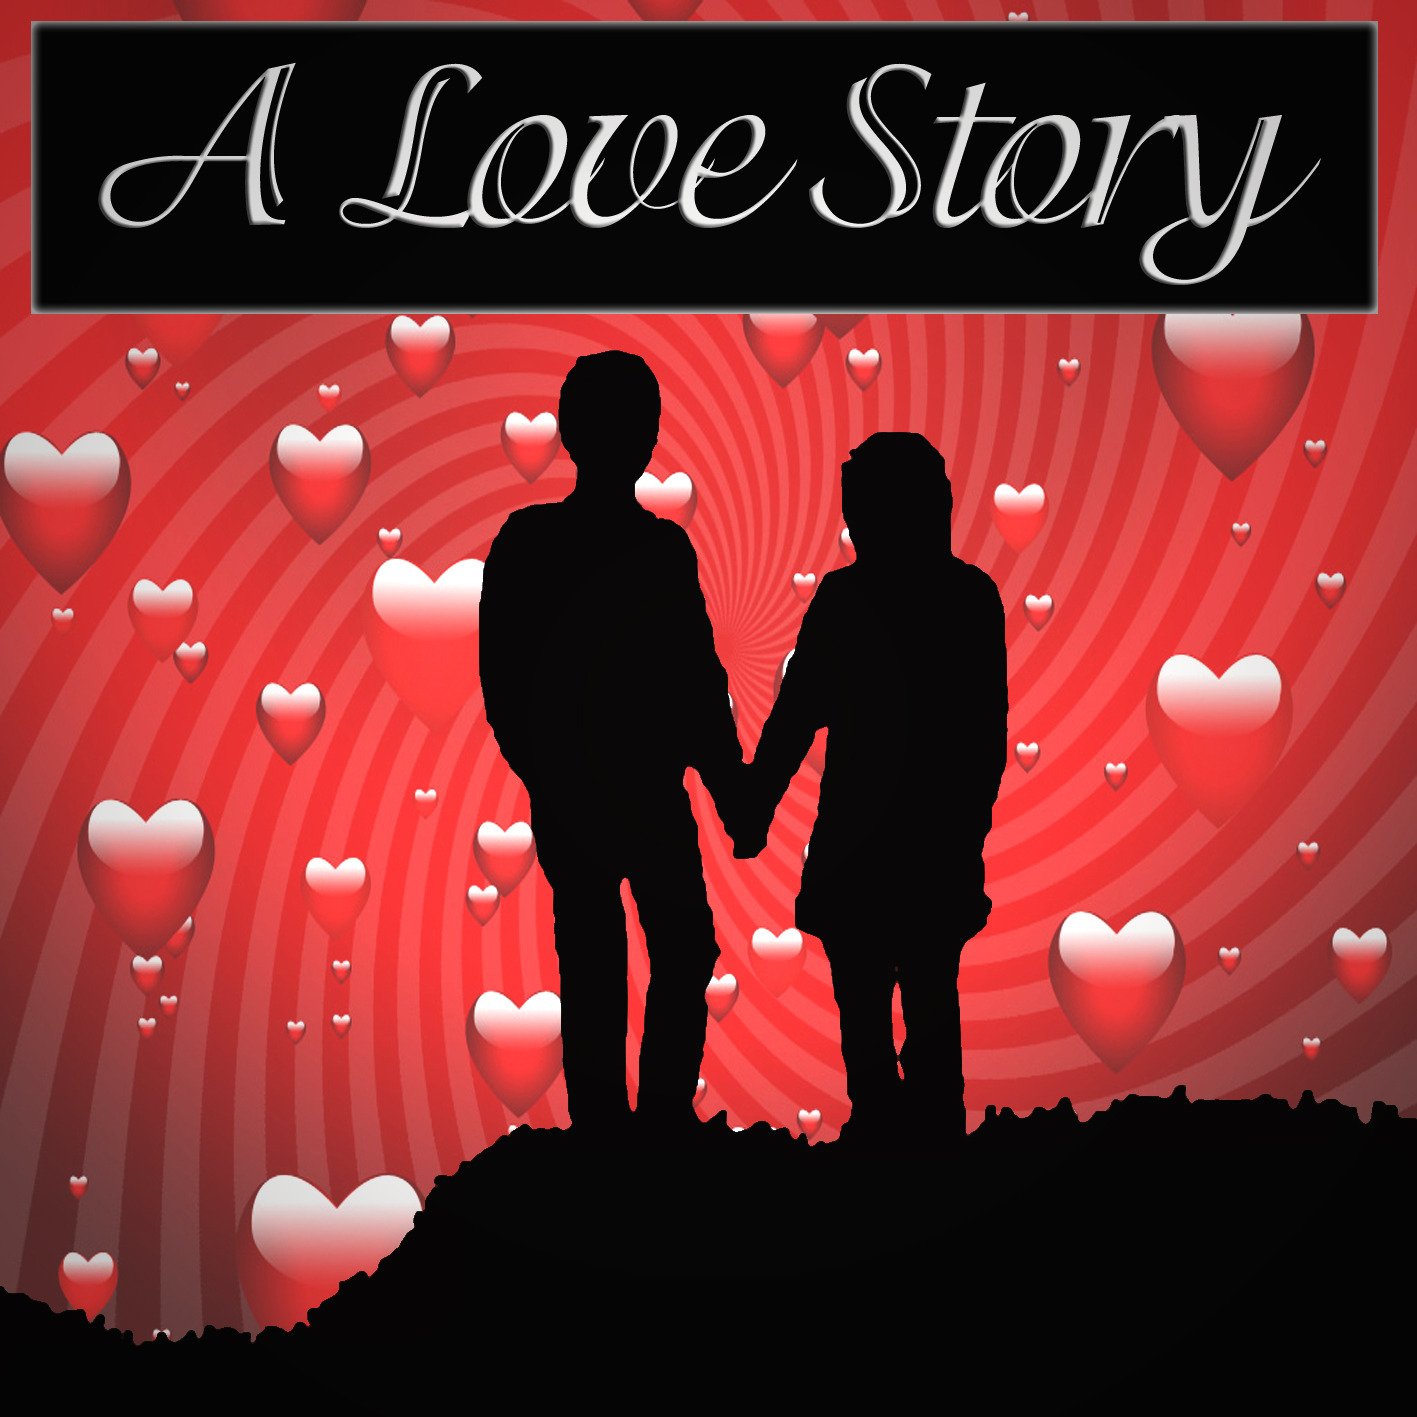 Tell lovely. Love story обложка. Песня Love story обложка. Love story надпись. Обложка для любовной истории.